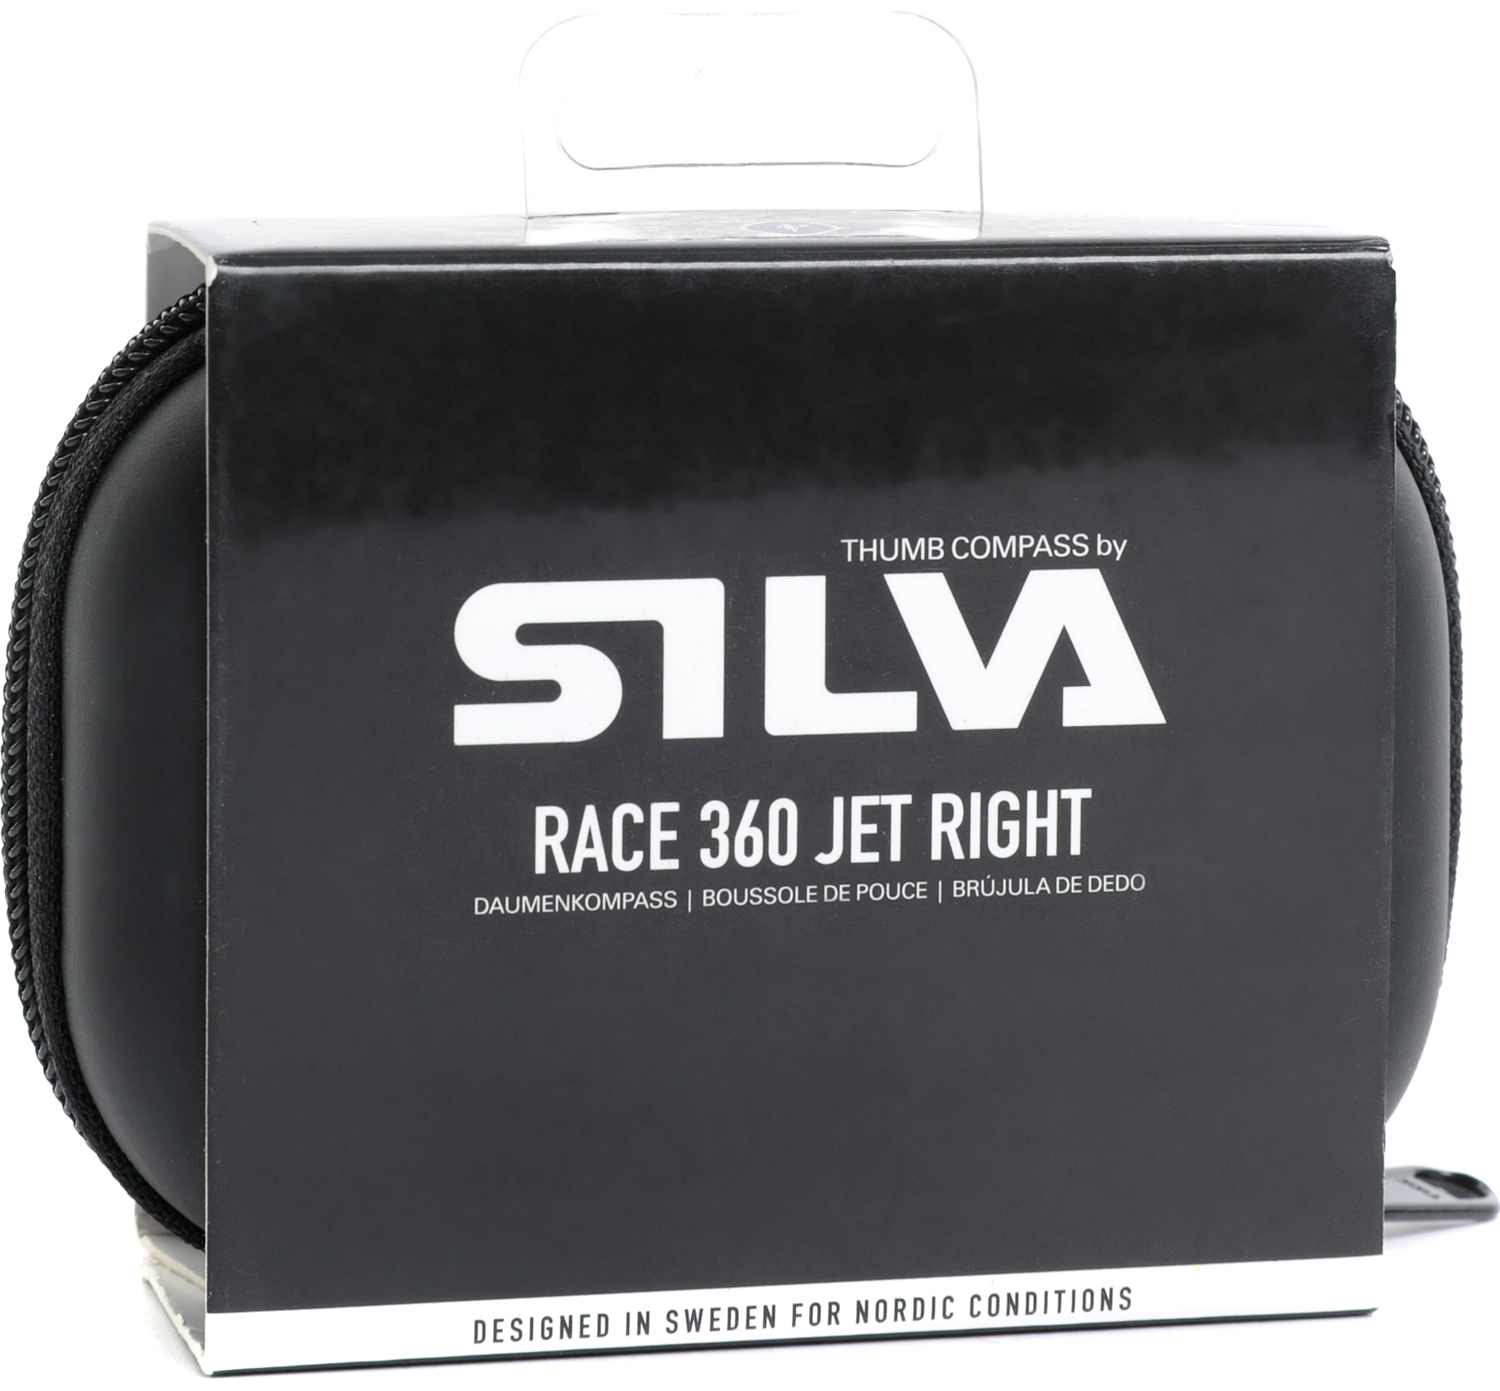 Компас Silva Compass Race 360 Jet Right